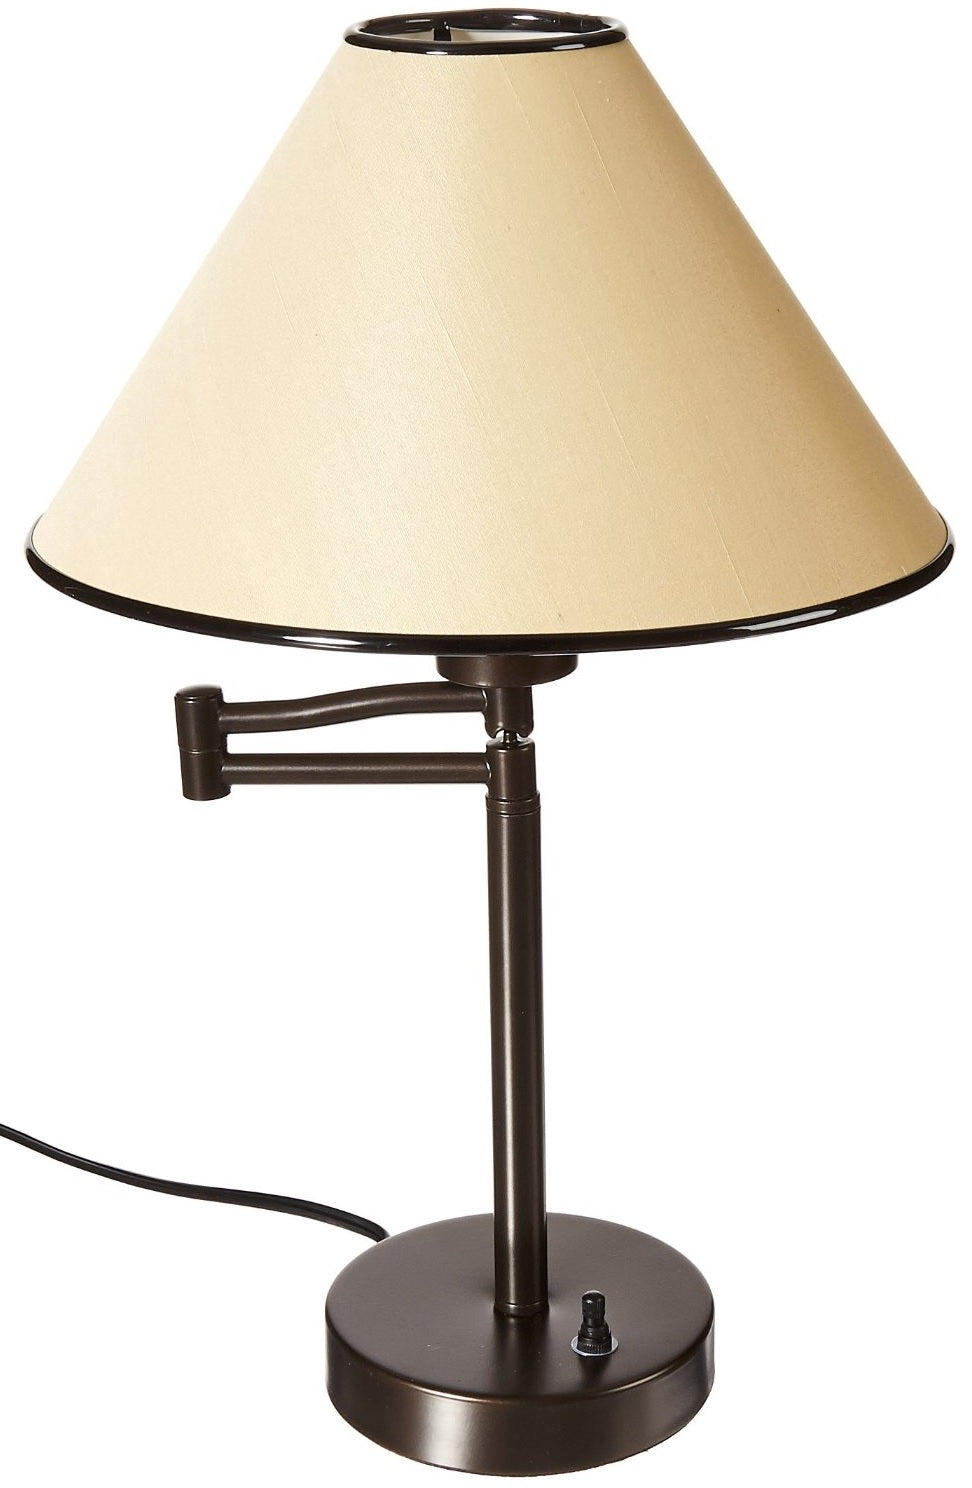 Boston Harbor TB-8008-VB Adjustable Desk Lamp With Swing Arm, 18-1/2", Venetian Bronze